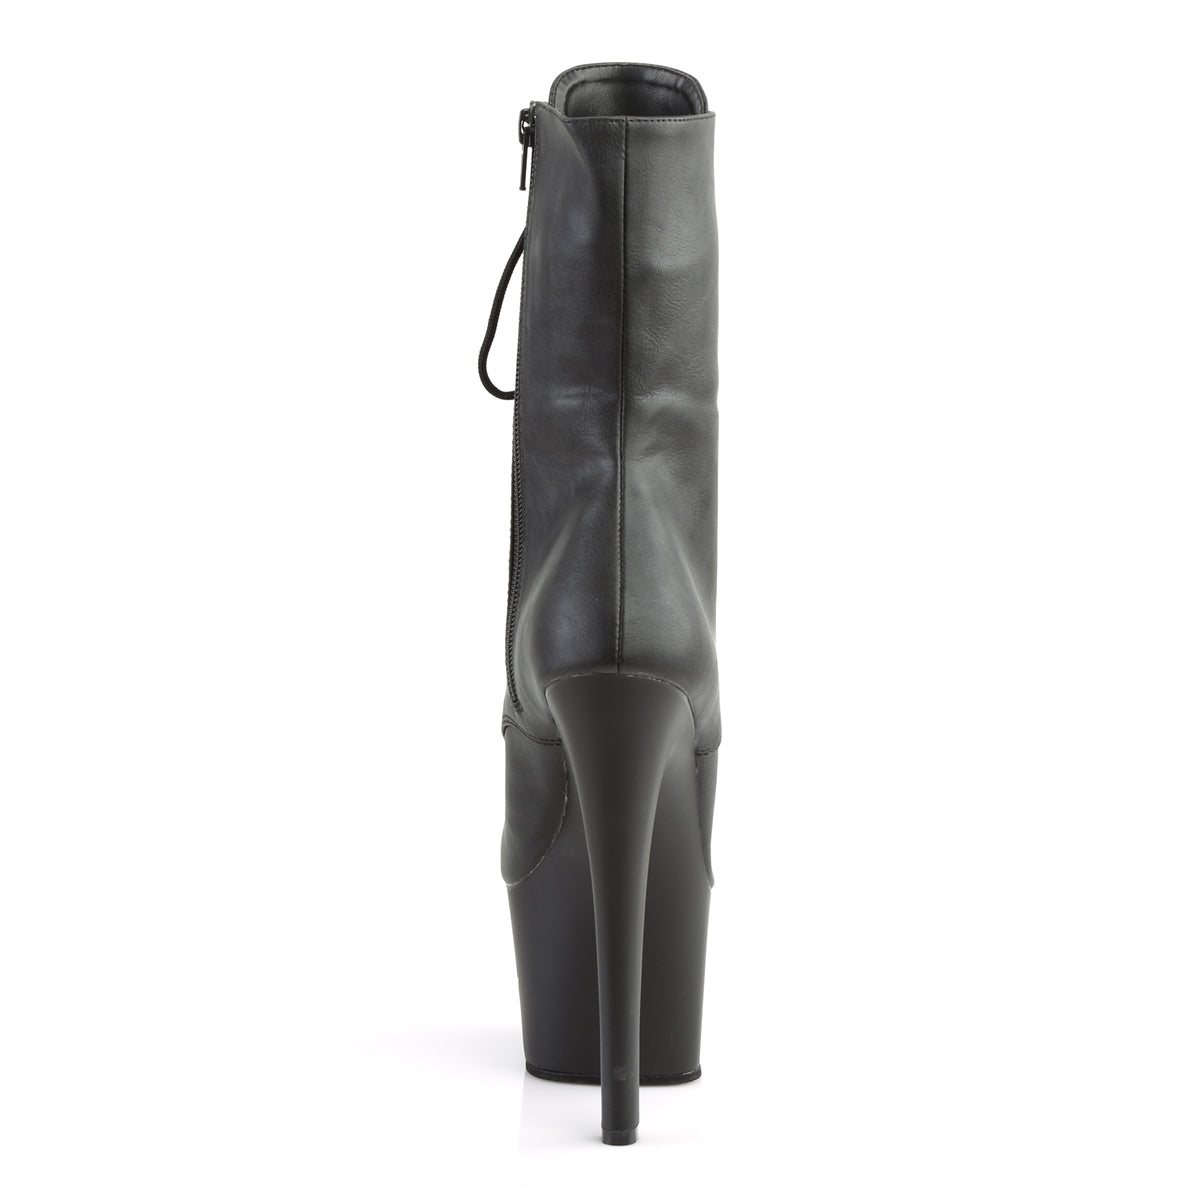 SKY-1020 Pleaser 7 Inch Heel Black Pole Dancing Platforms-Pleaser- Sexy Shoes Fetish Footwear